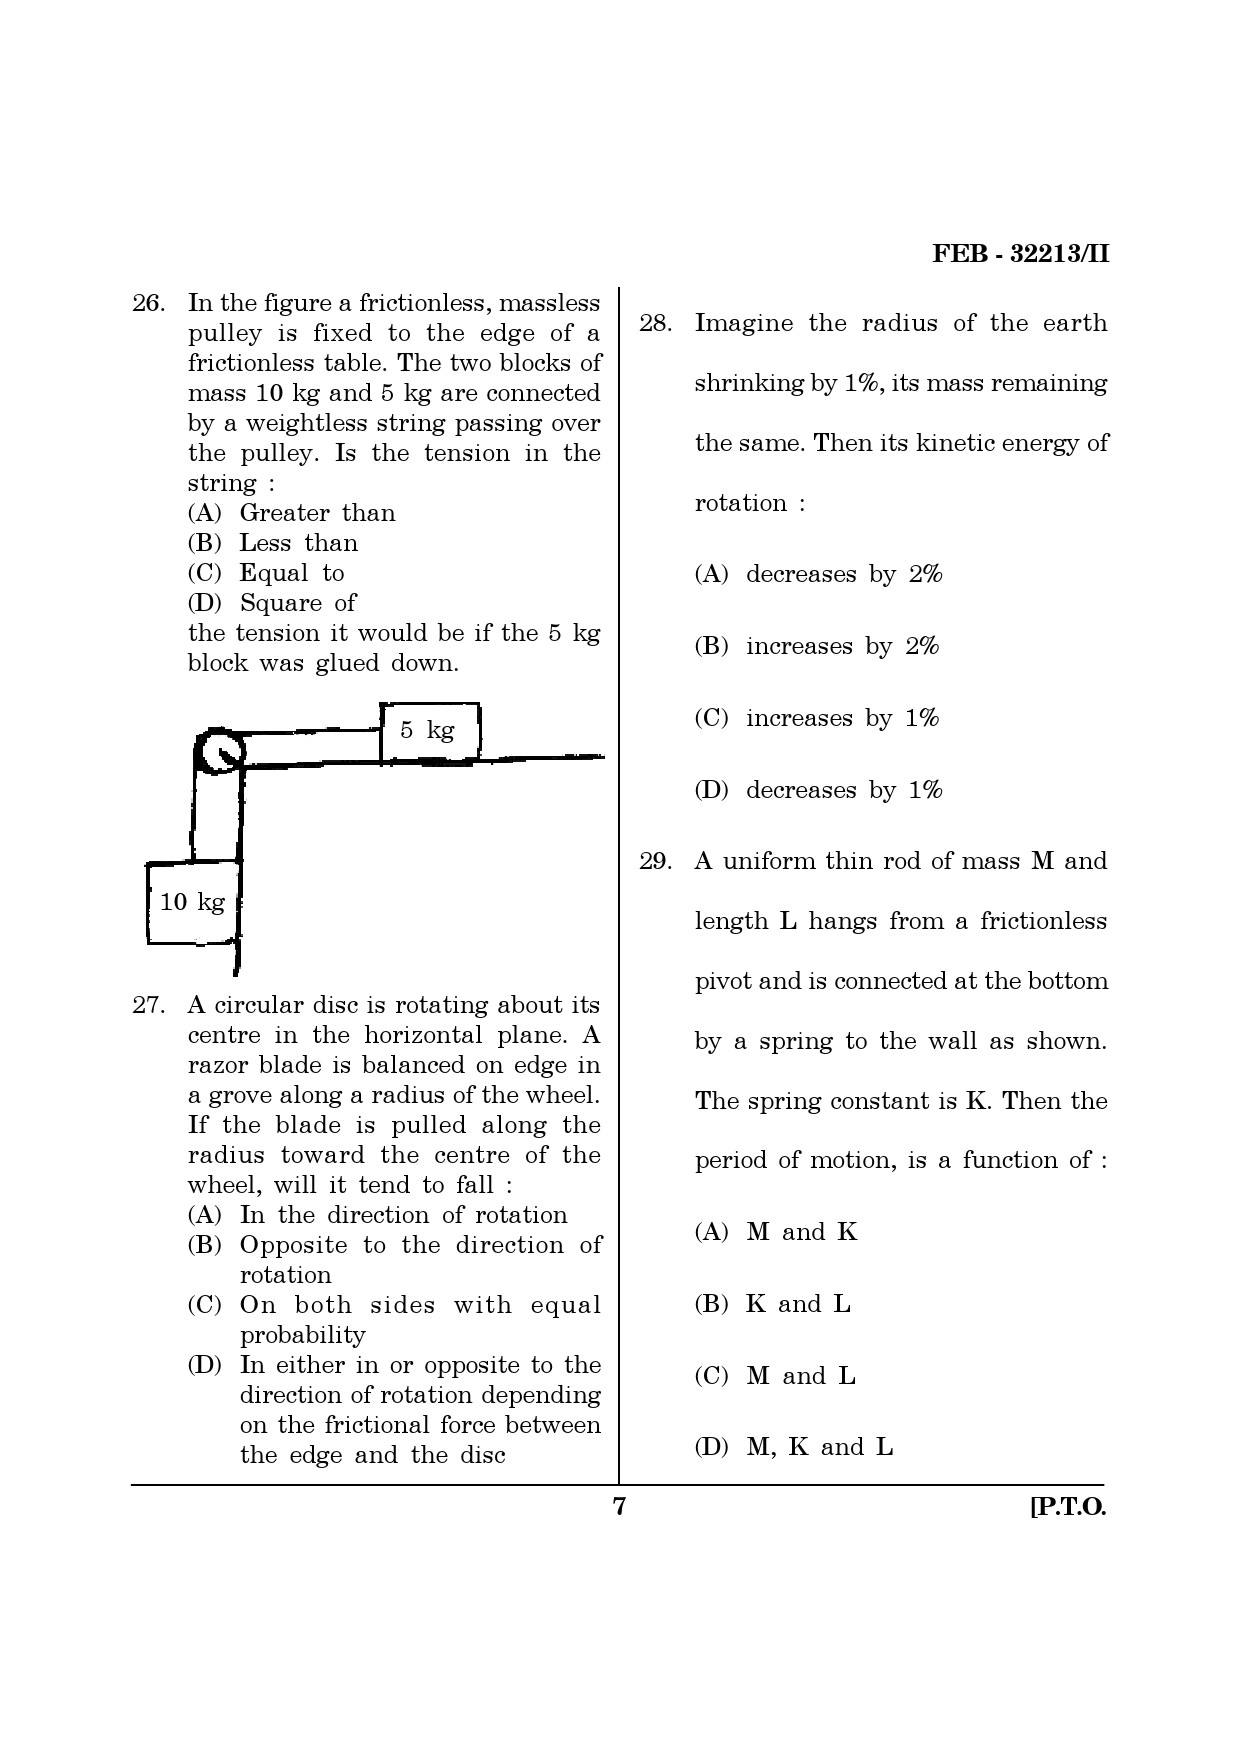 Maharashtra SET Physics Question Paper II February 2013 7